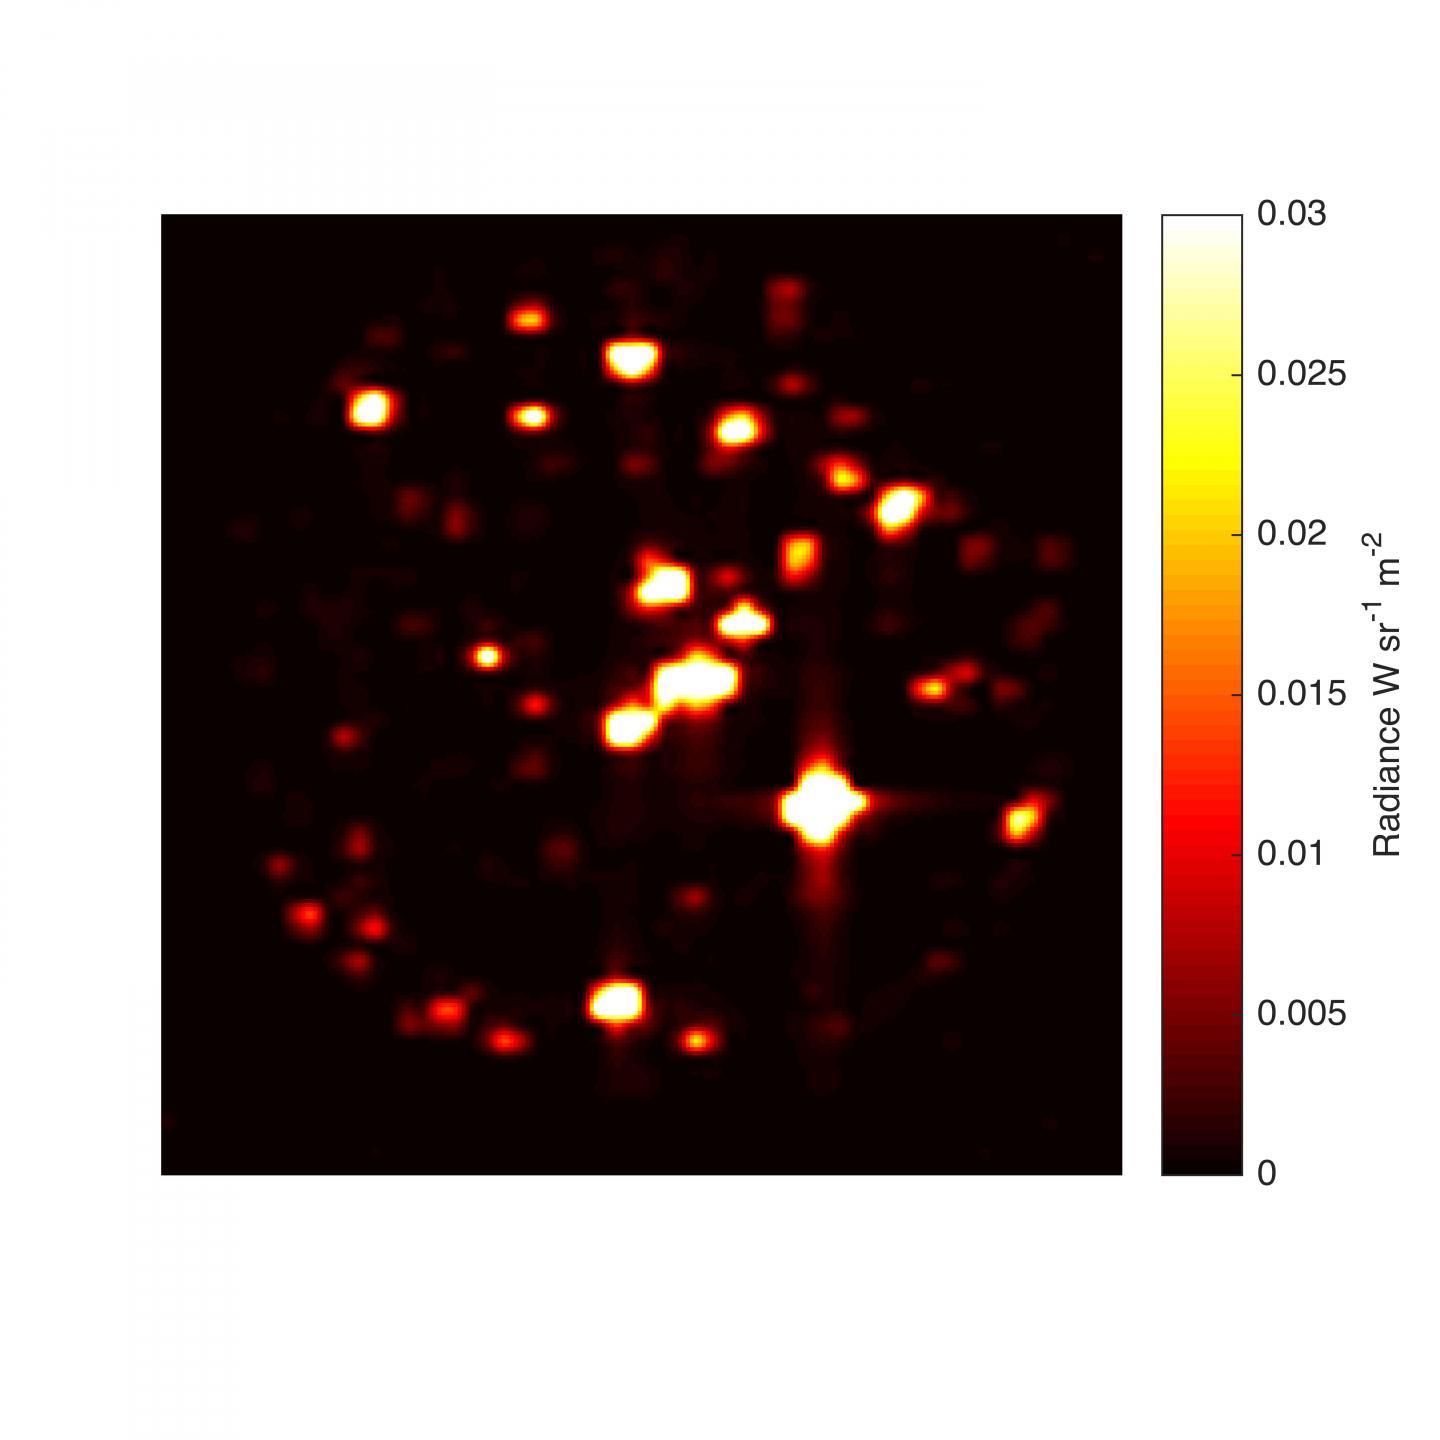 Jovian Infrared Auroral Mapper (JIRAM) Image